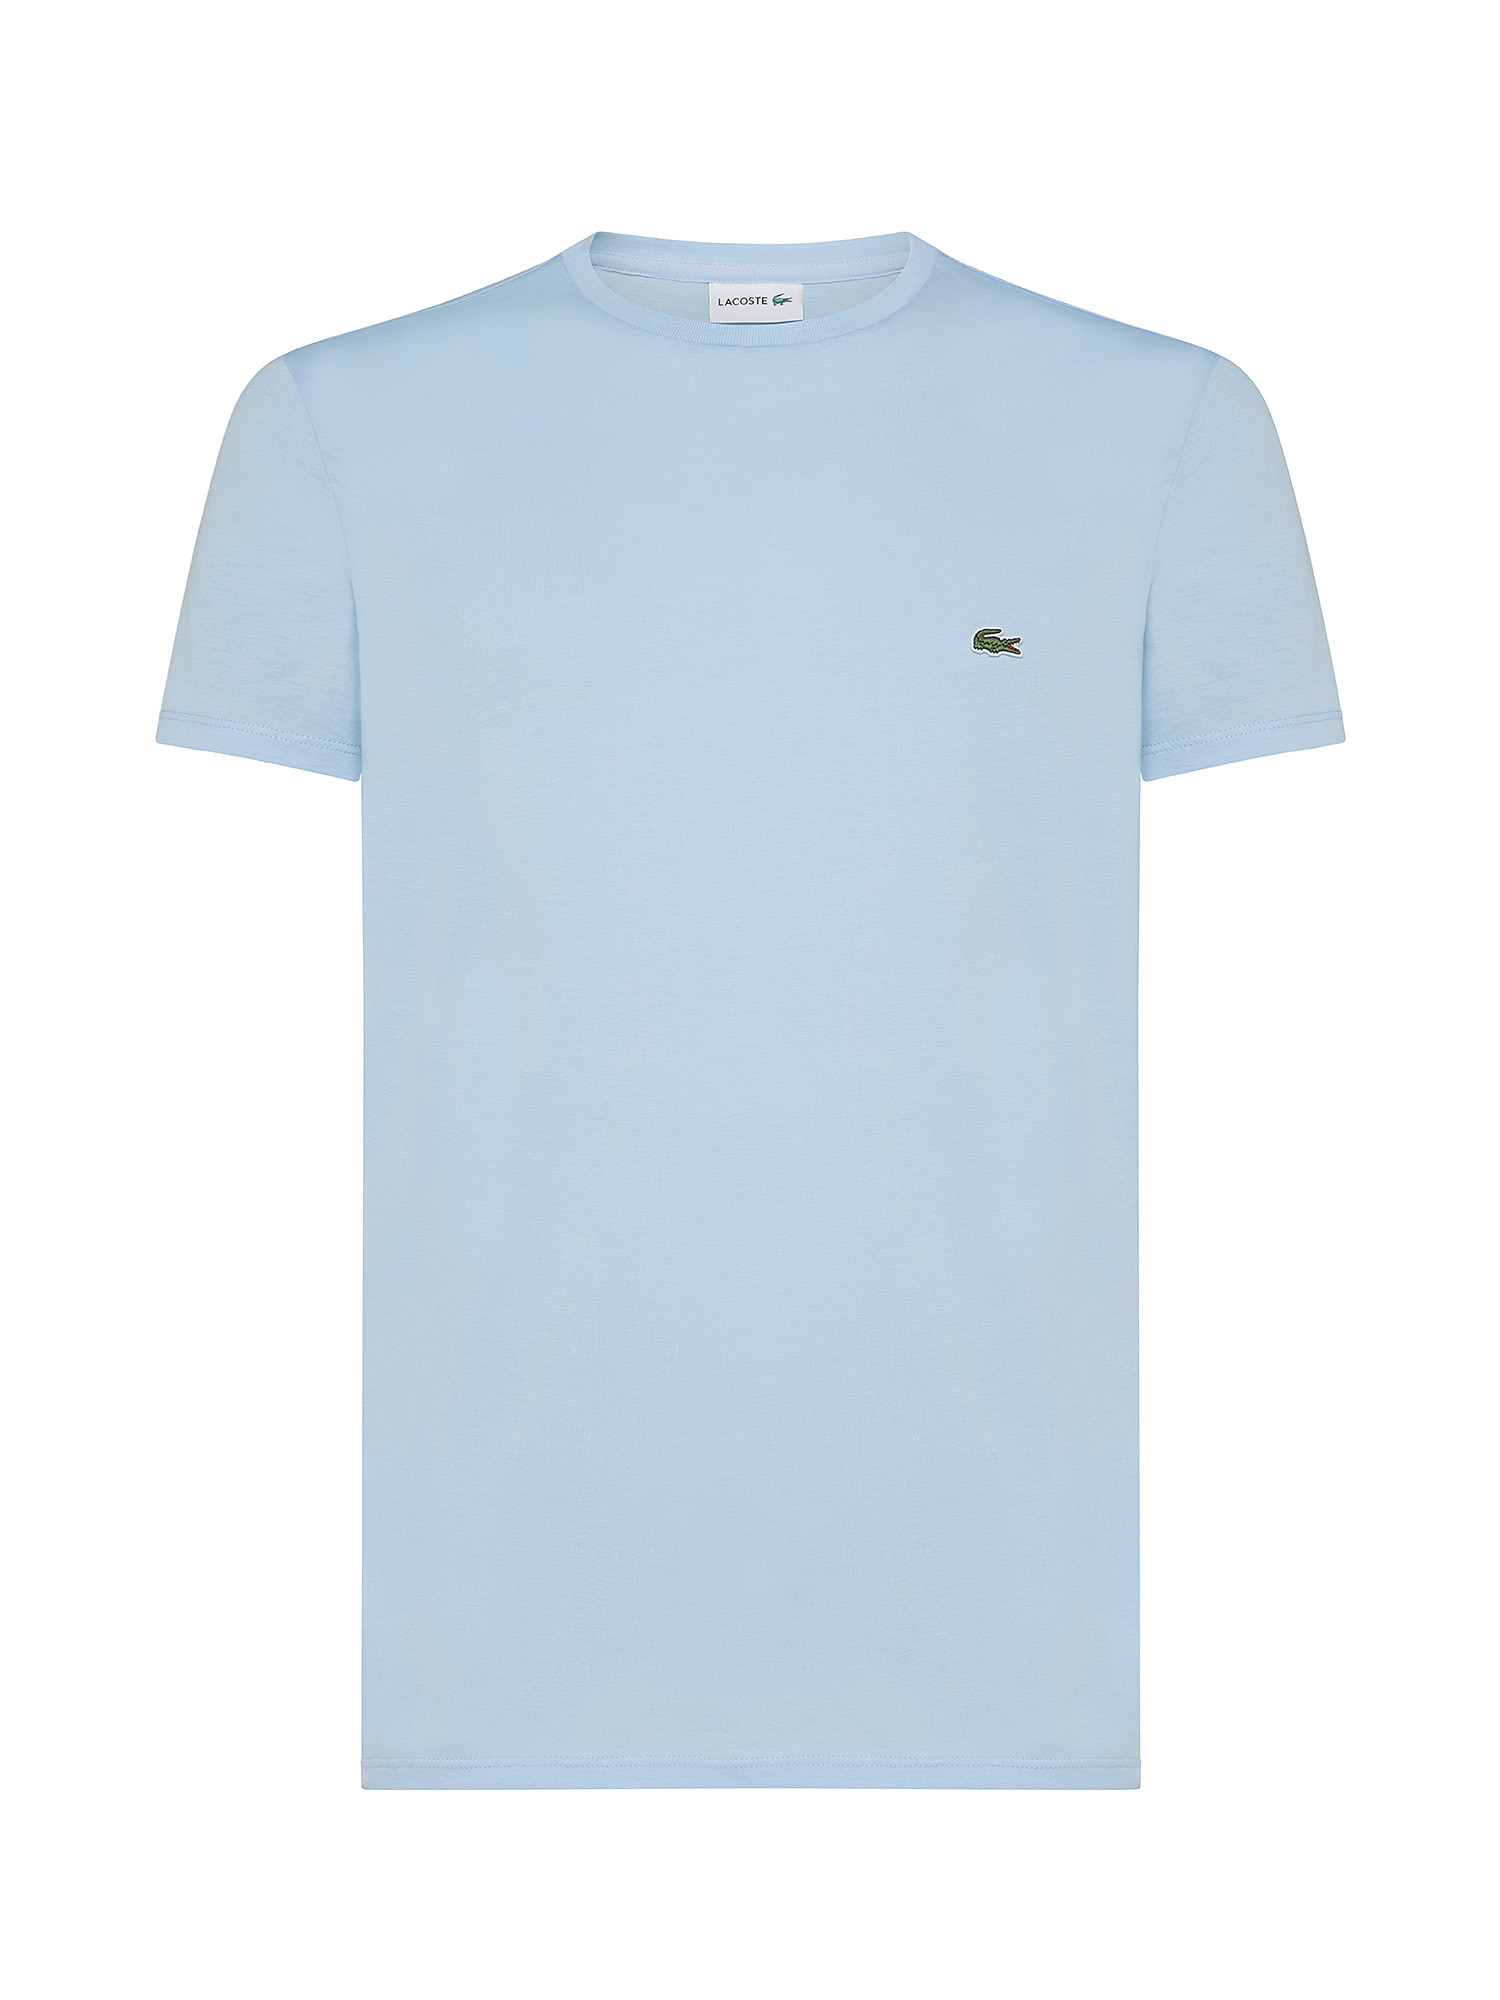 Lacoste - T-shirt girocollo in jersey di cotone Pima, Azzurro, large image number 0